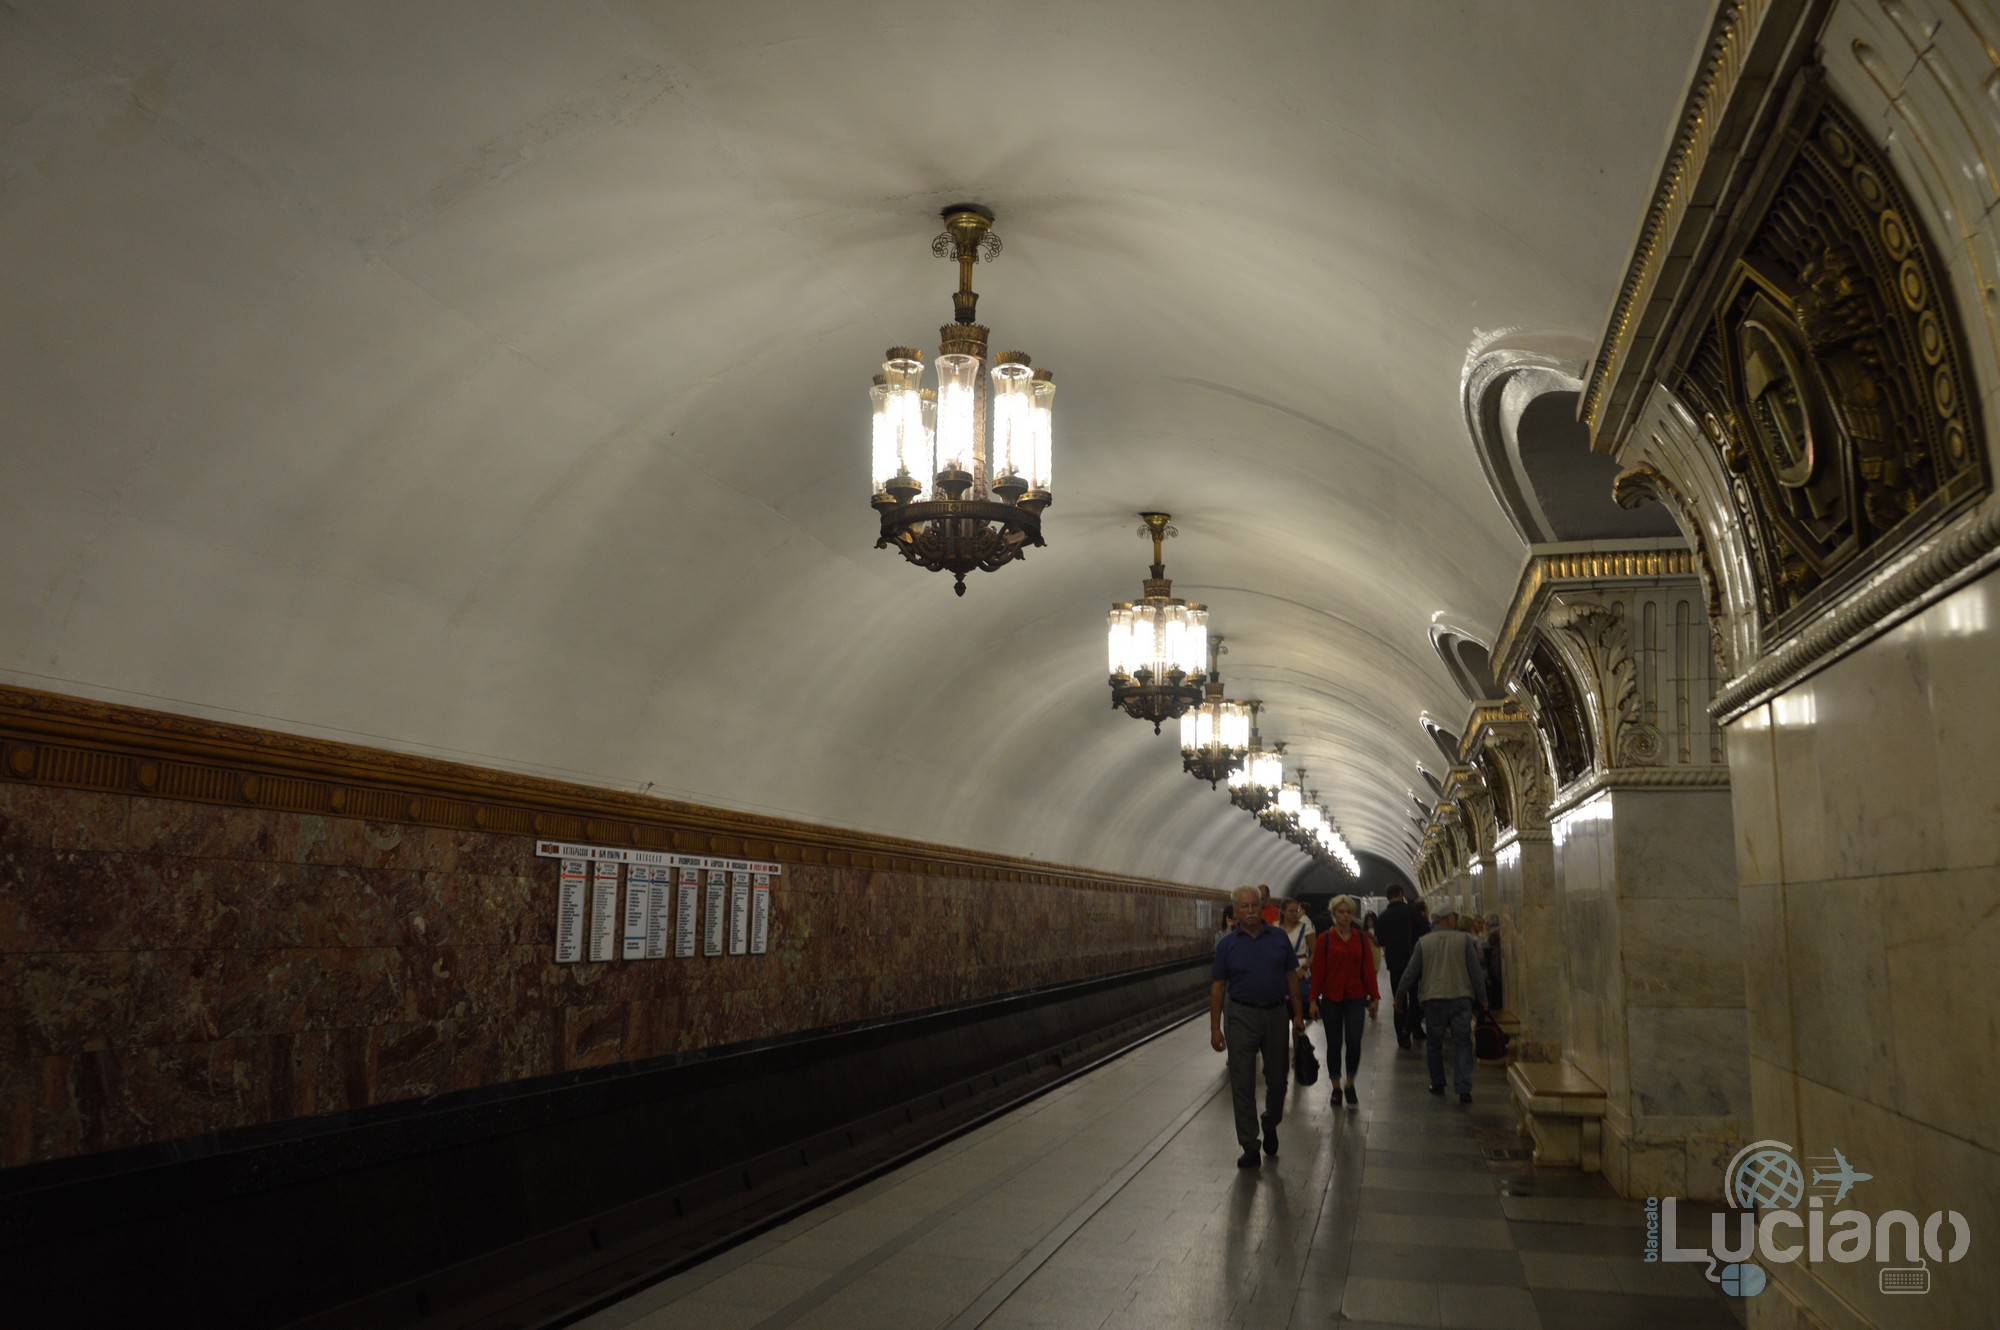 Prospekt Mira (in russo: Проспект Мира) - Metro 5 - Metro Circolare Mosca - Russia